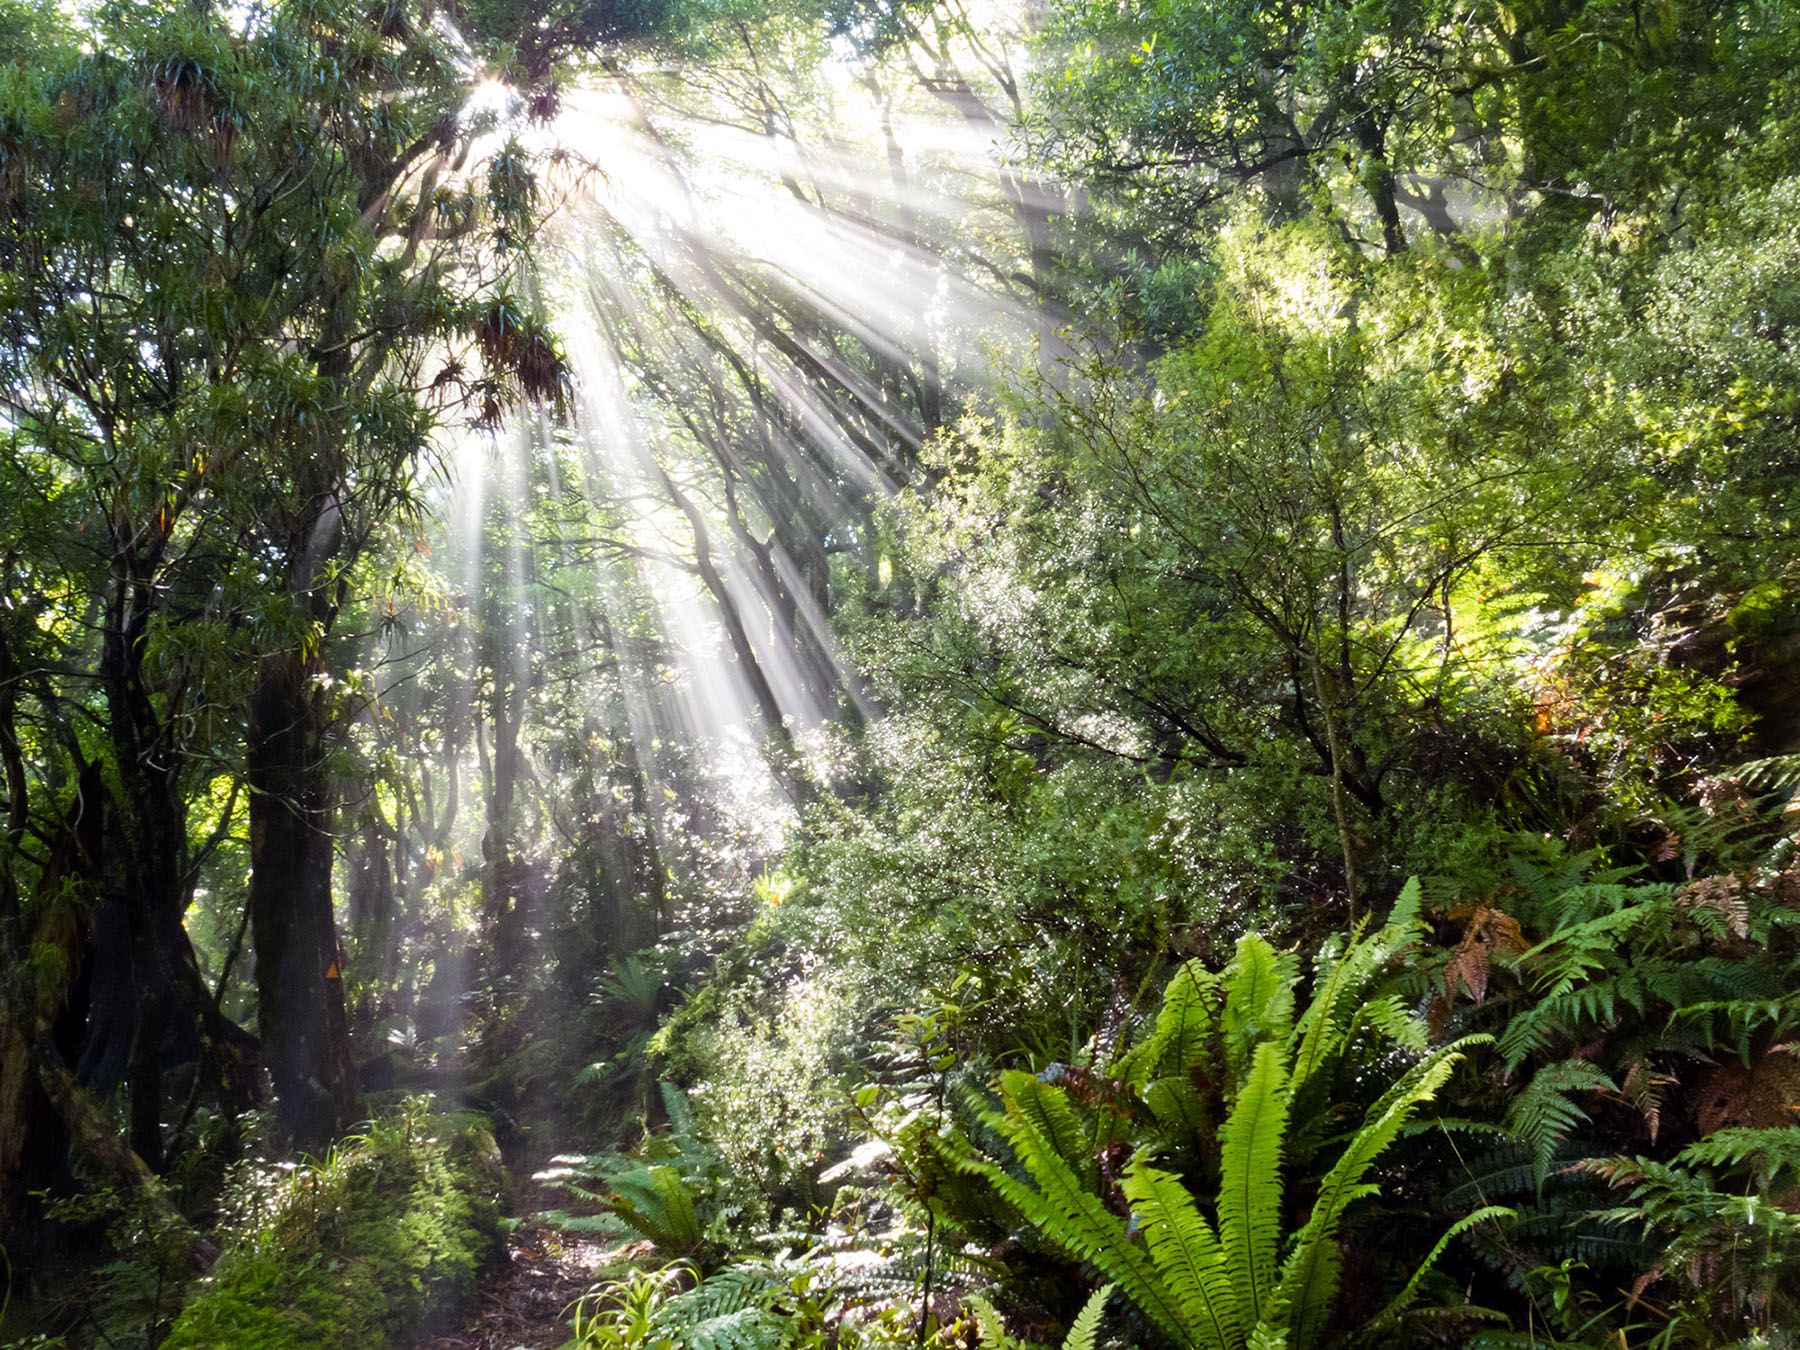 https://www.rainforest-alliance.org/wp-content/uploads/2021/07/sunlight-through-rainforest-canopy.jpg.optimal.jpg